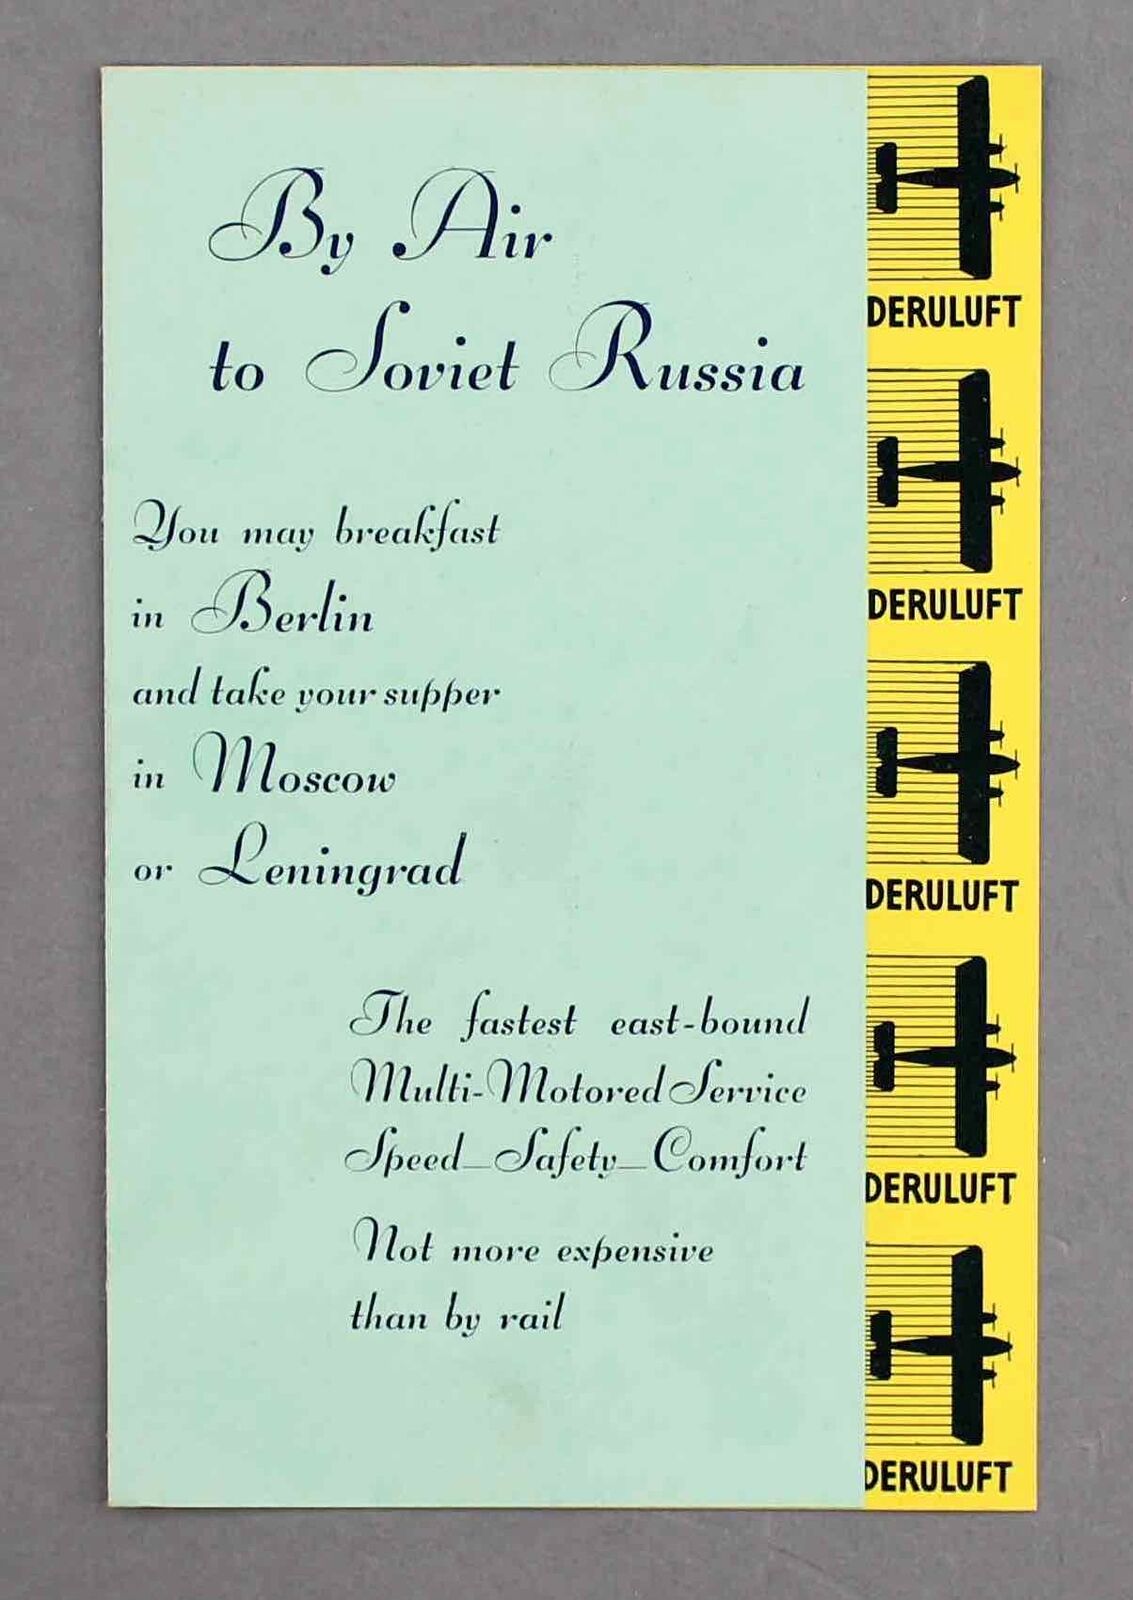 DERULUFT VINTAGE PRE-WAR AIRLINE TIMETABLE 1934 BERLIN - MOSCOW / LENINGRAD